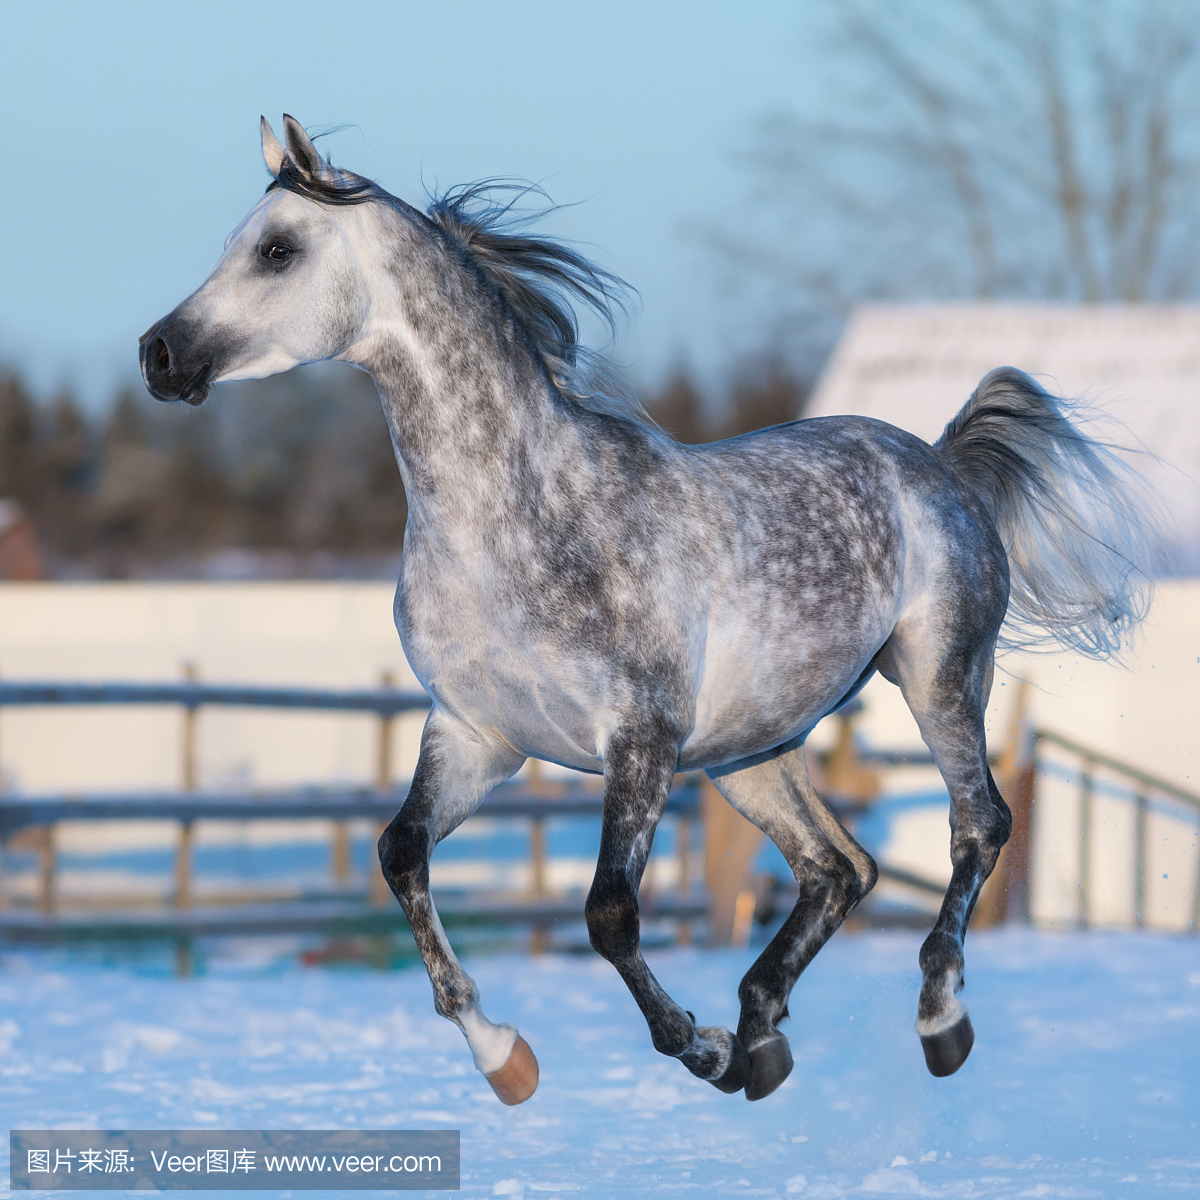 Dapple-grey stallion of Arabian breed in motion